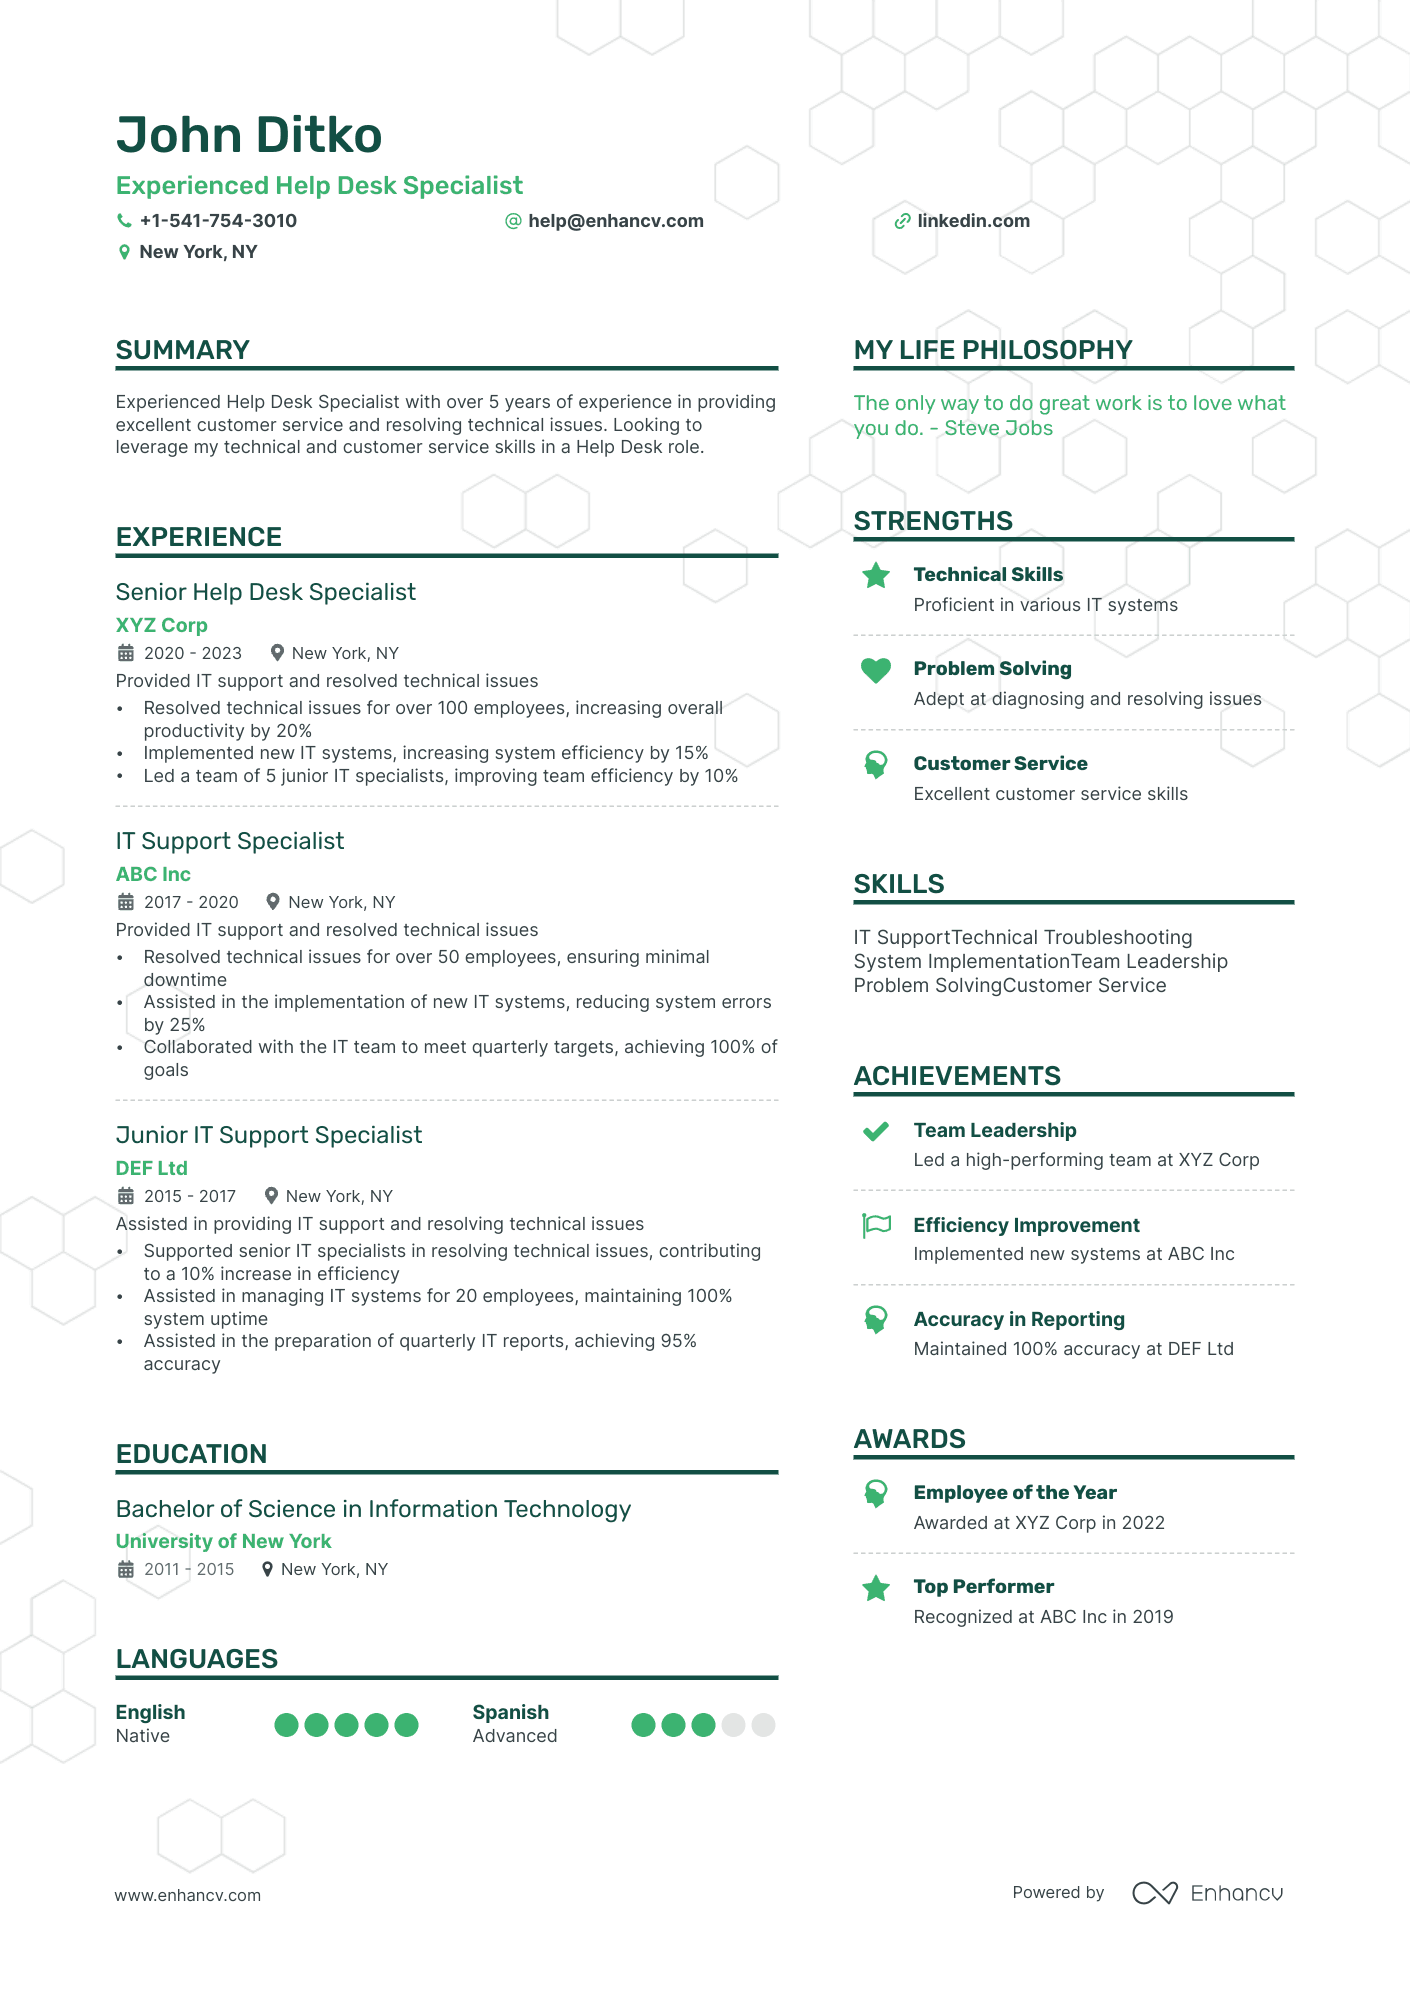 Experienced Help Desk Specialist resume example